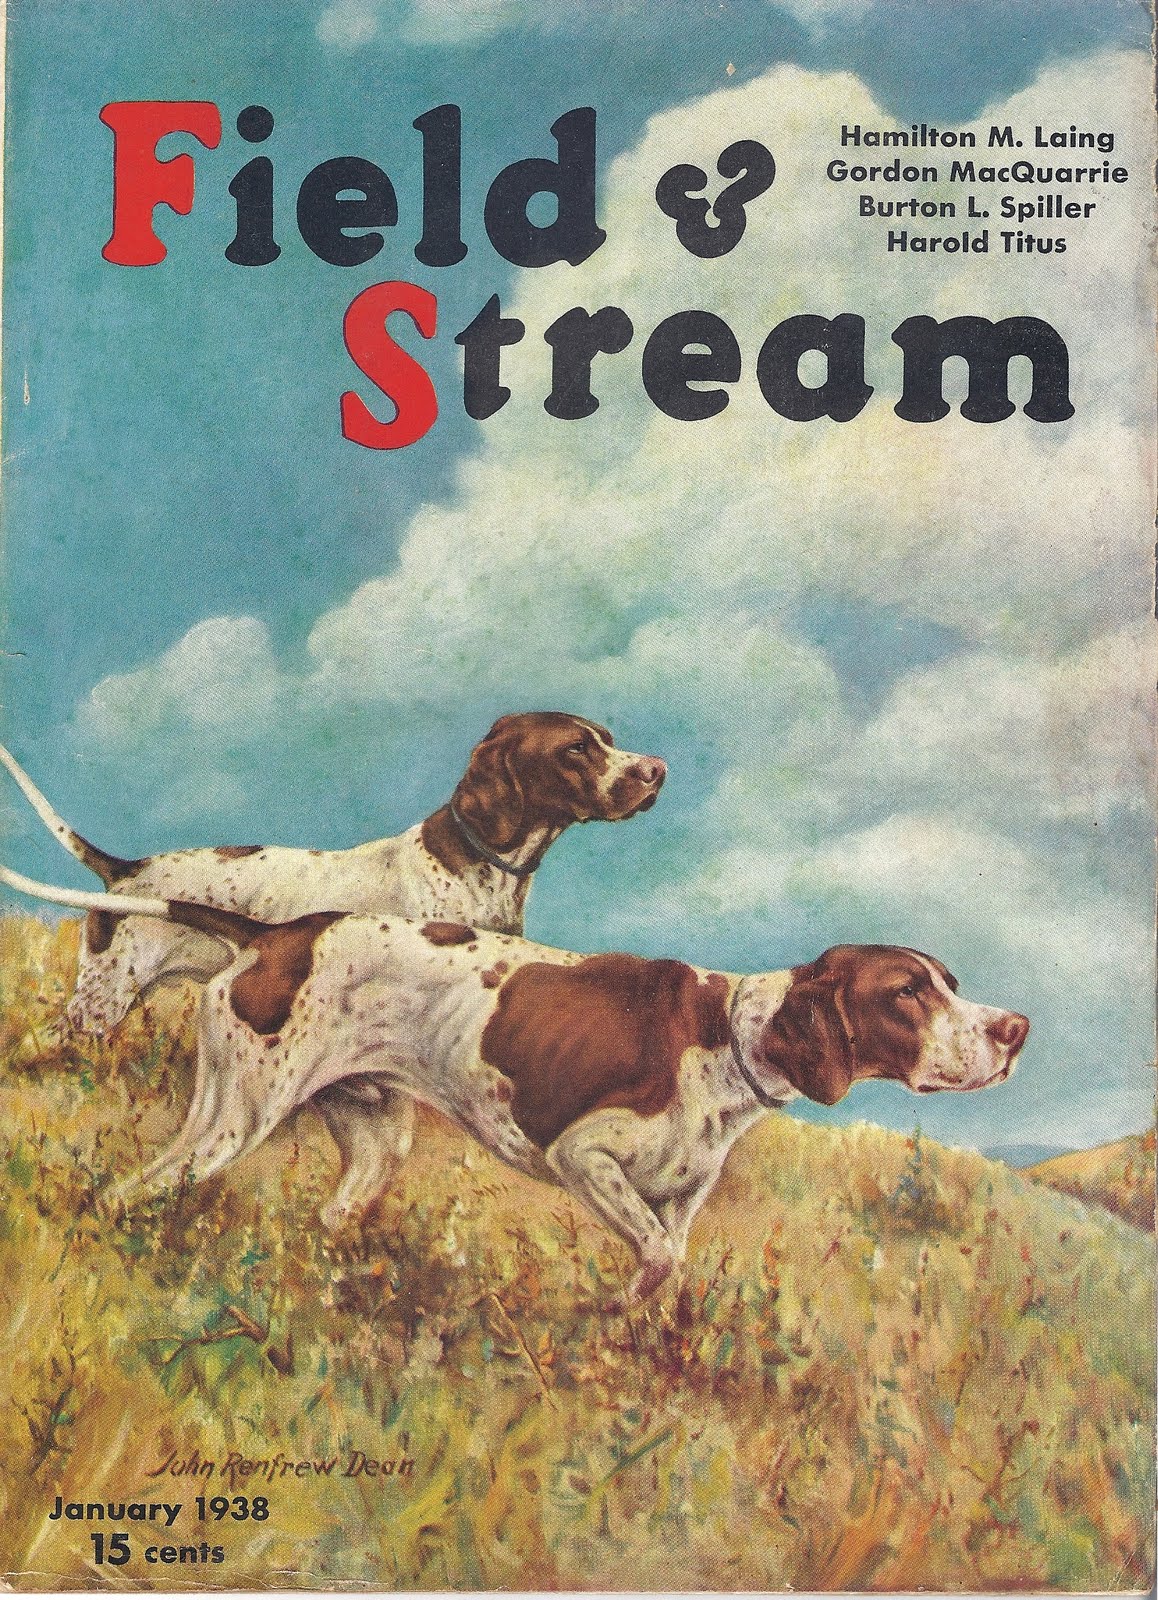 1937 MARCH FIELD & Stream Magazine - Dog Cover - Sp 5423L $75.00 - PicClick